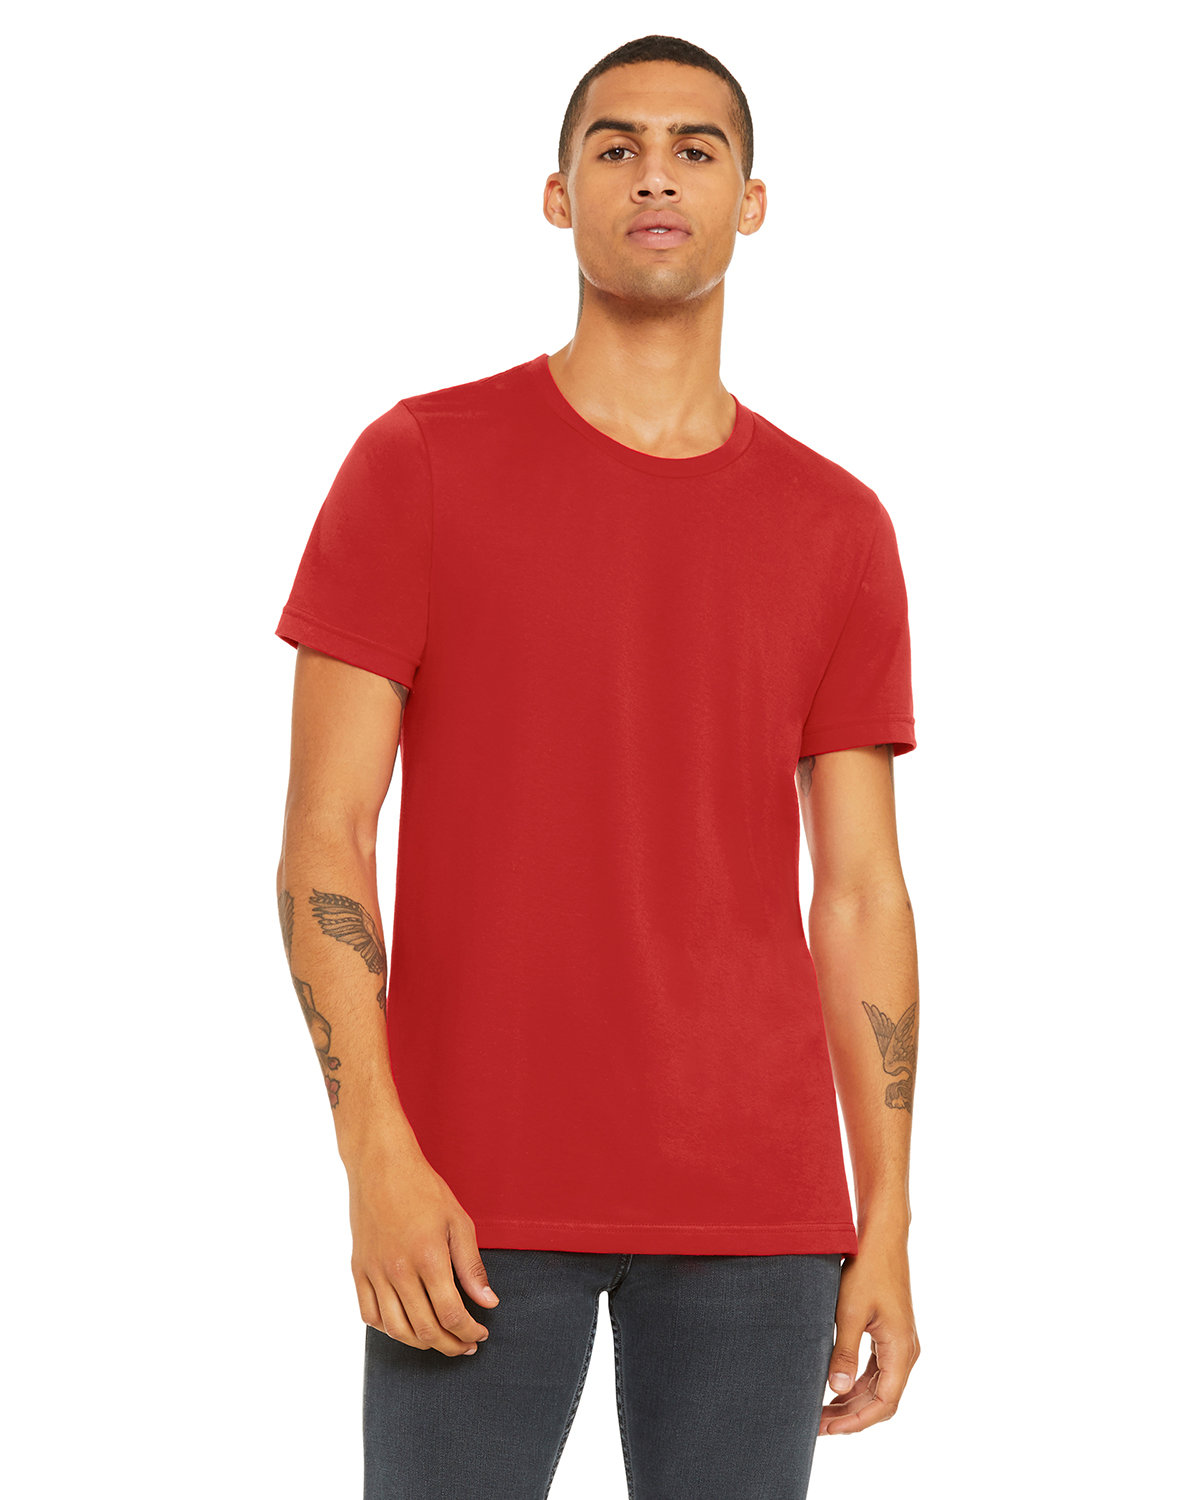 Bella + Canvas Unisex Jersey T-Shirt CANVAS RED 